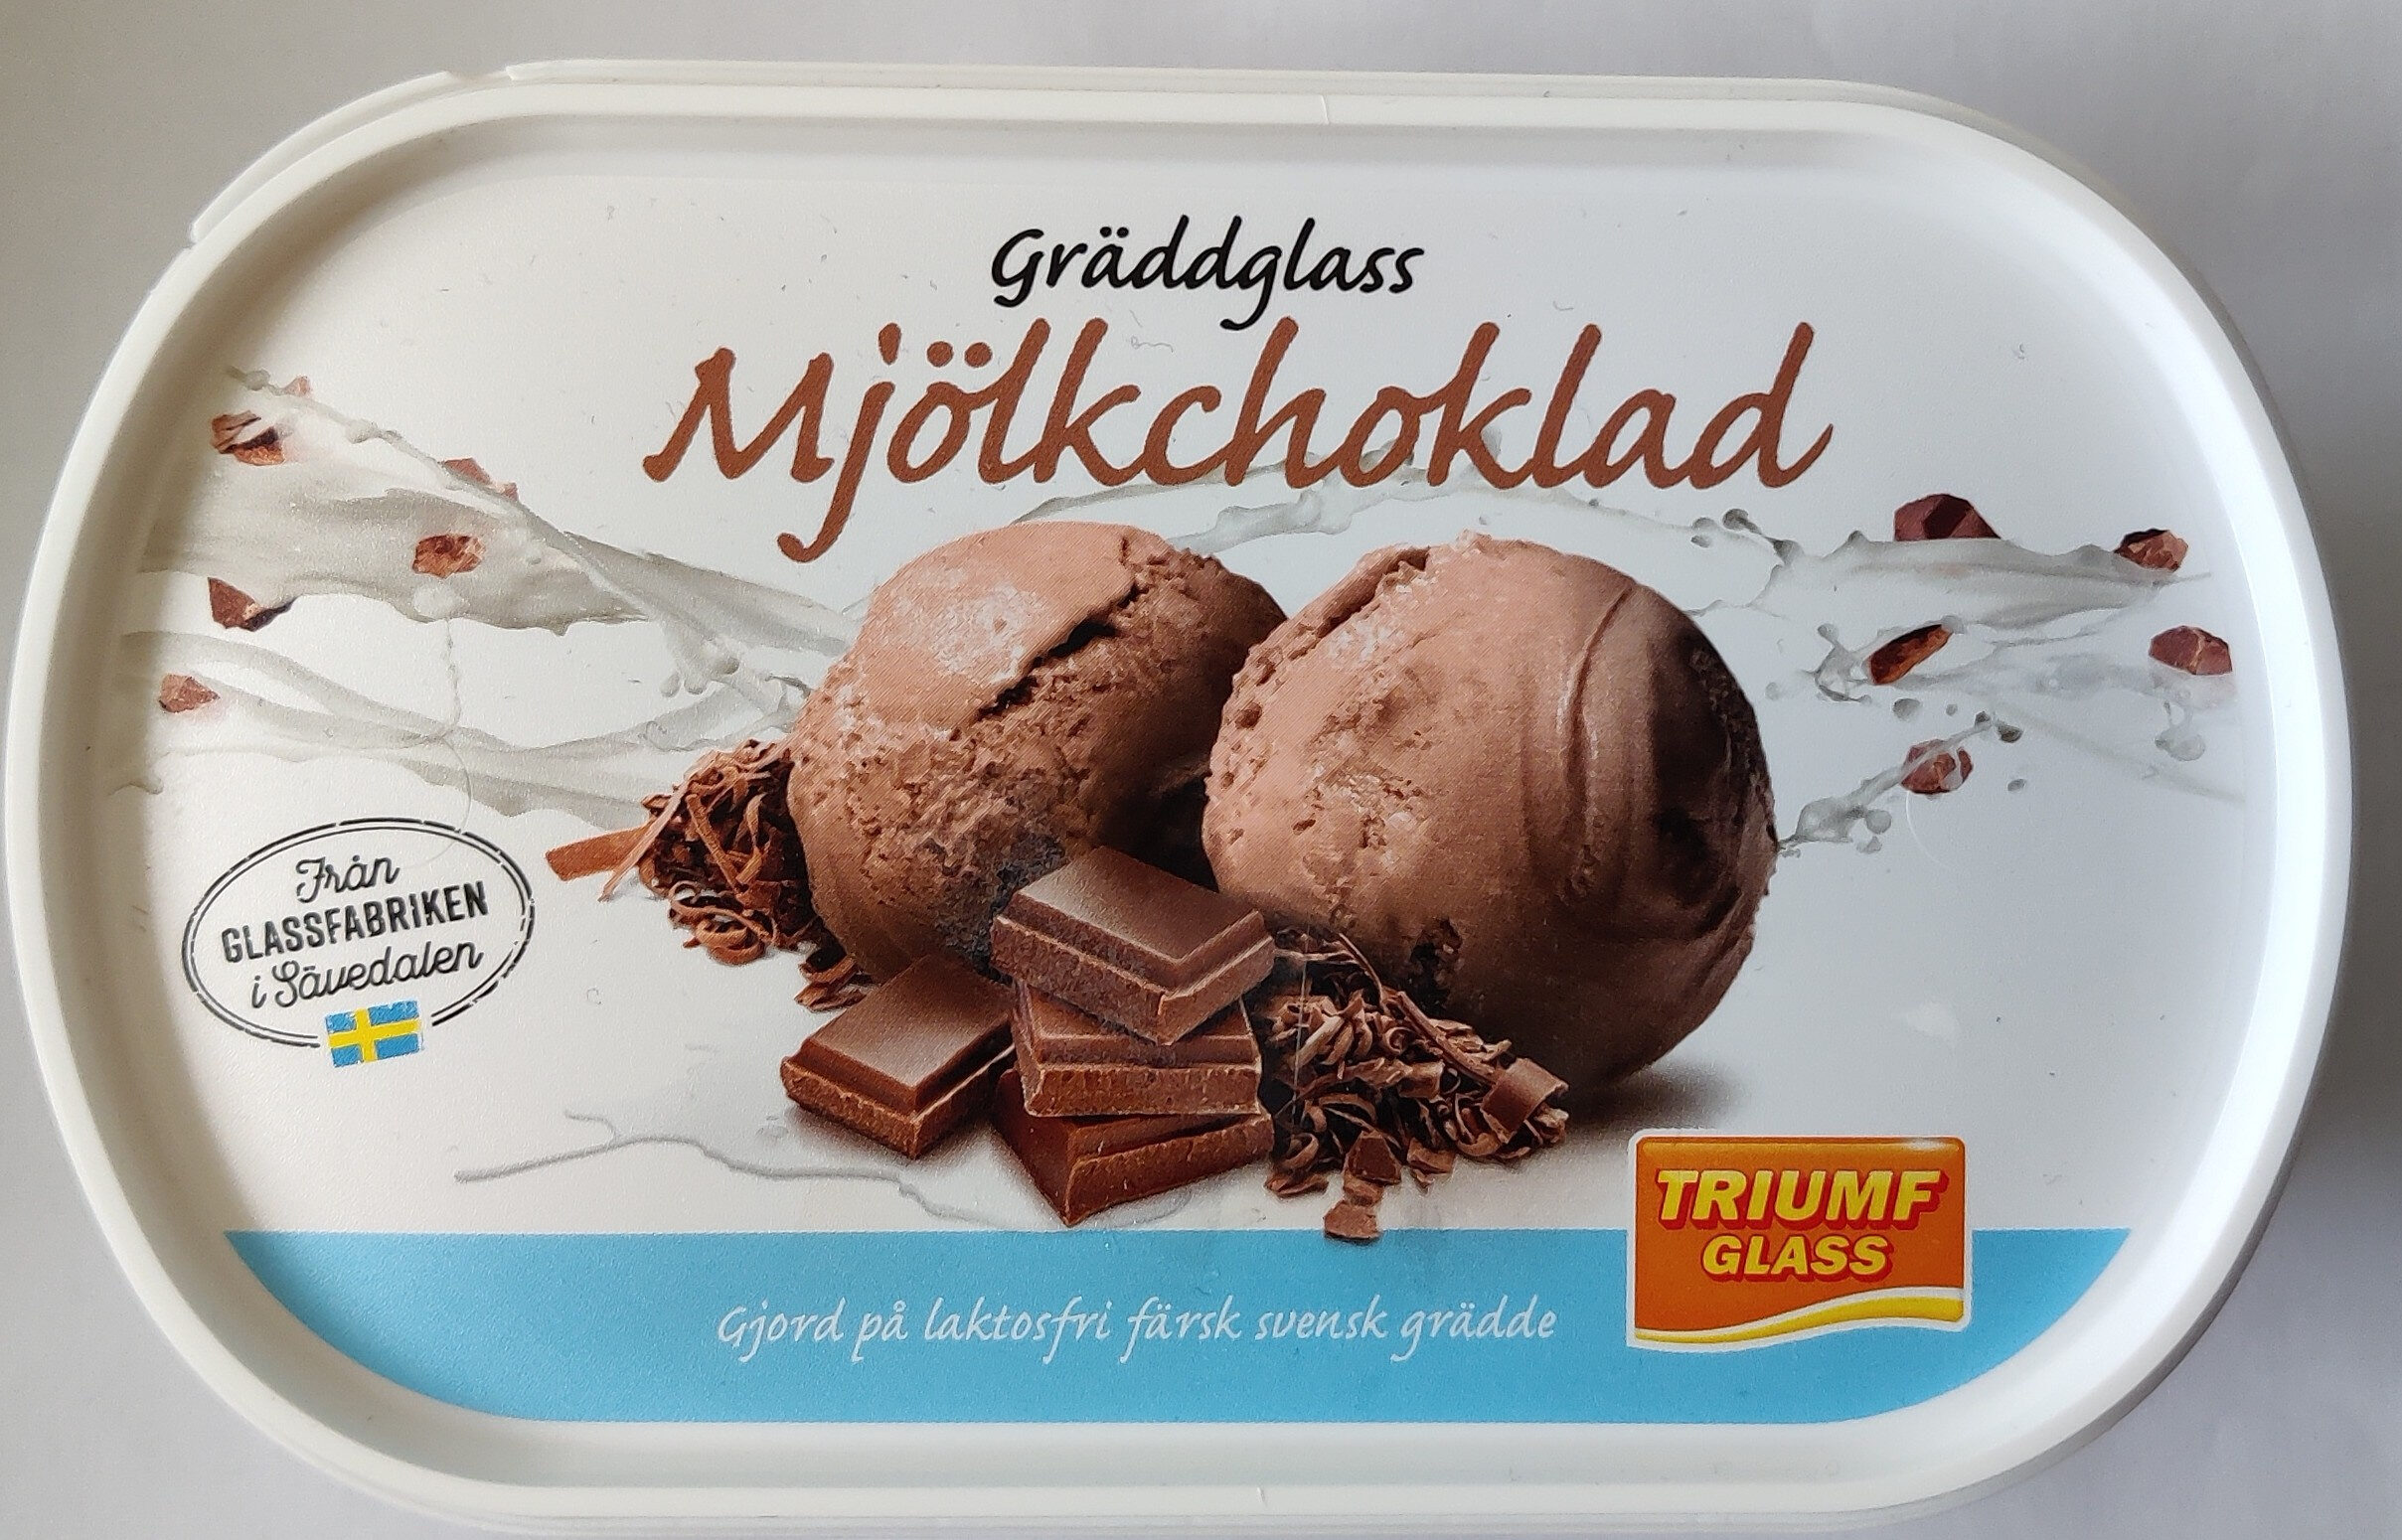 Gräddglass Mjölkchoklad - Produkt - sv